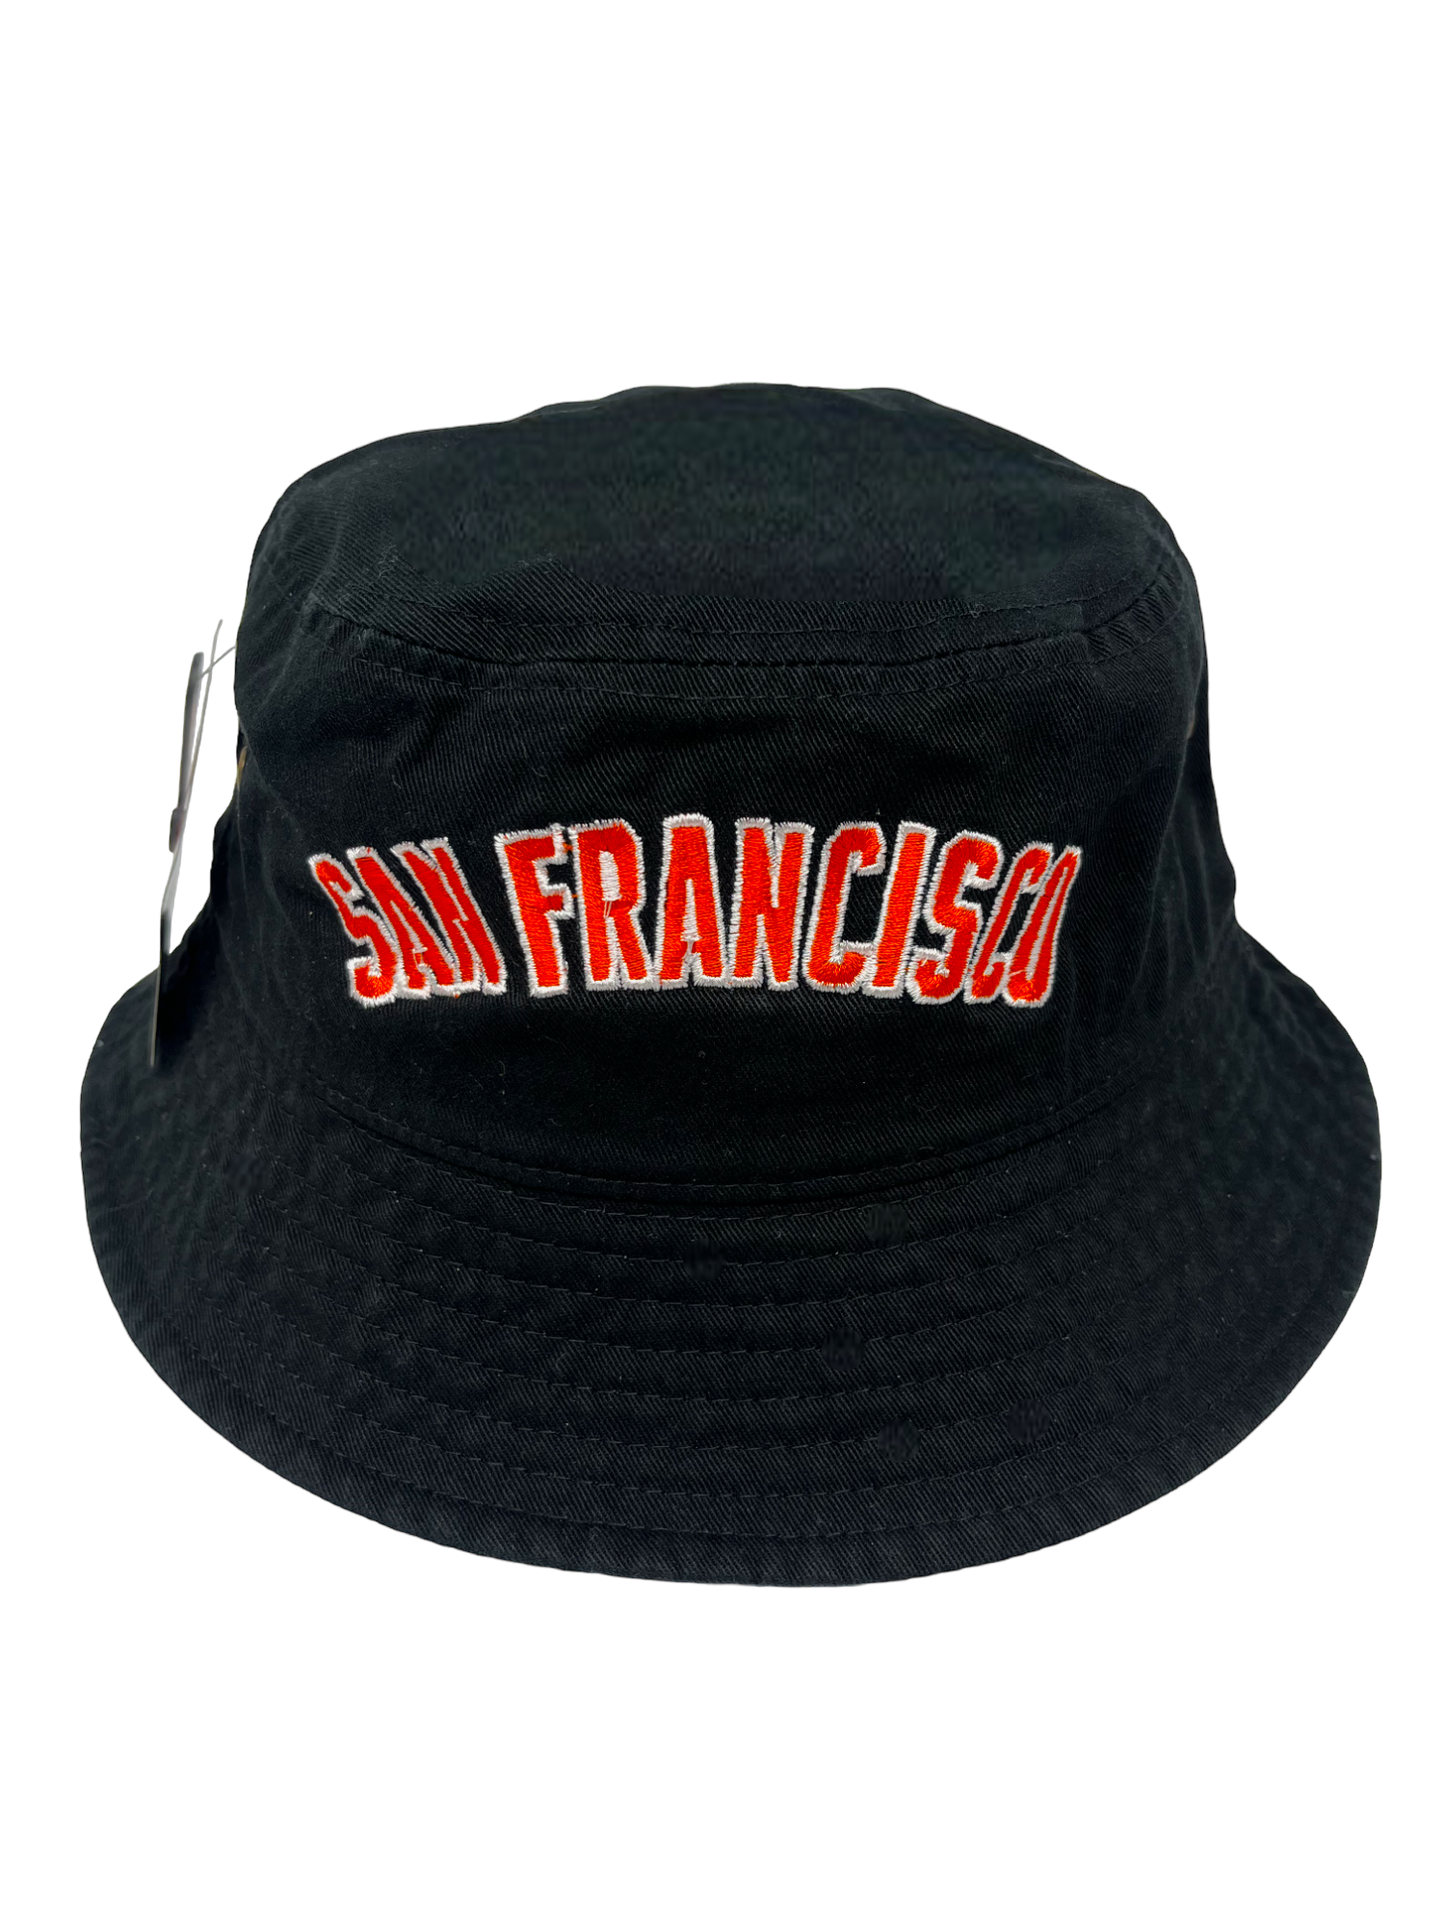 San Francisco Bucket Hat